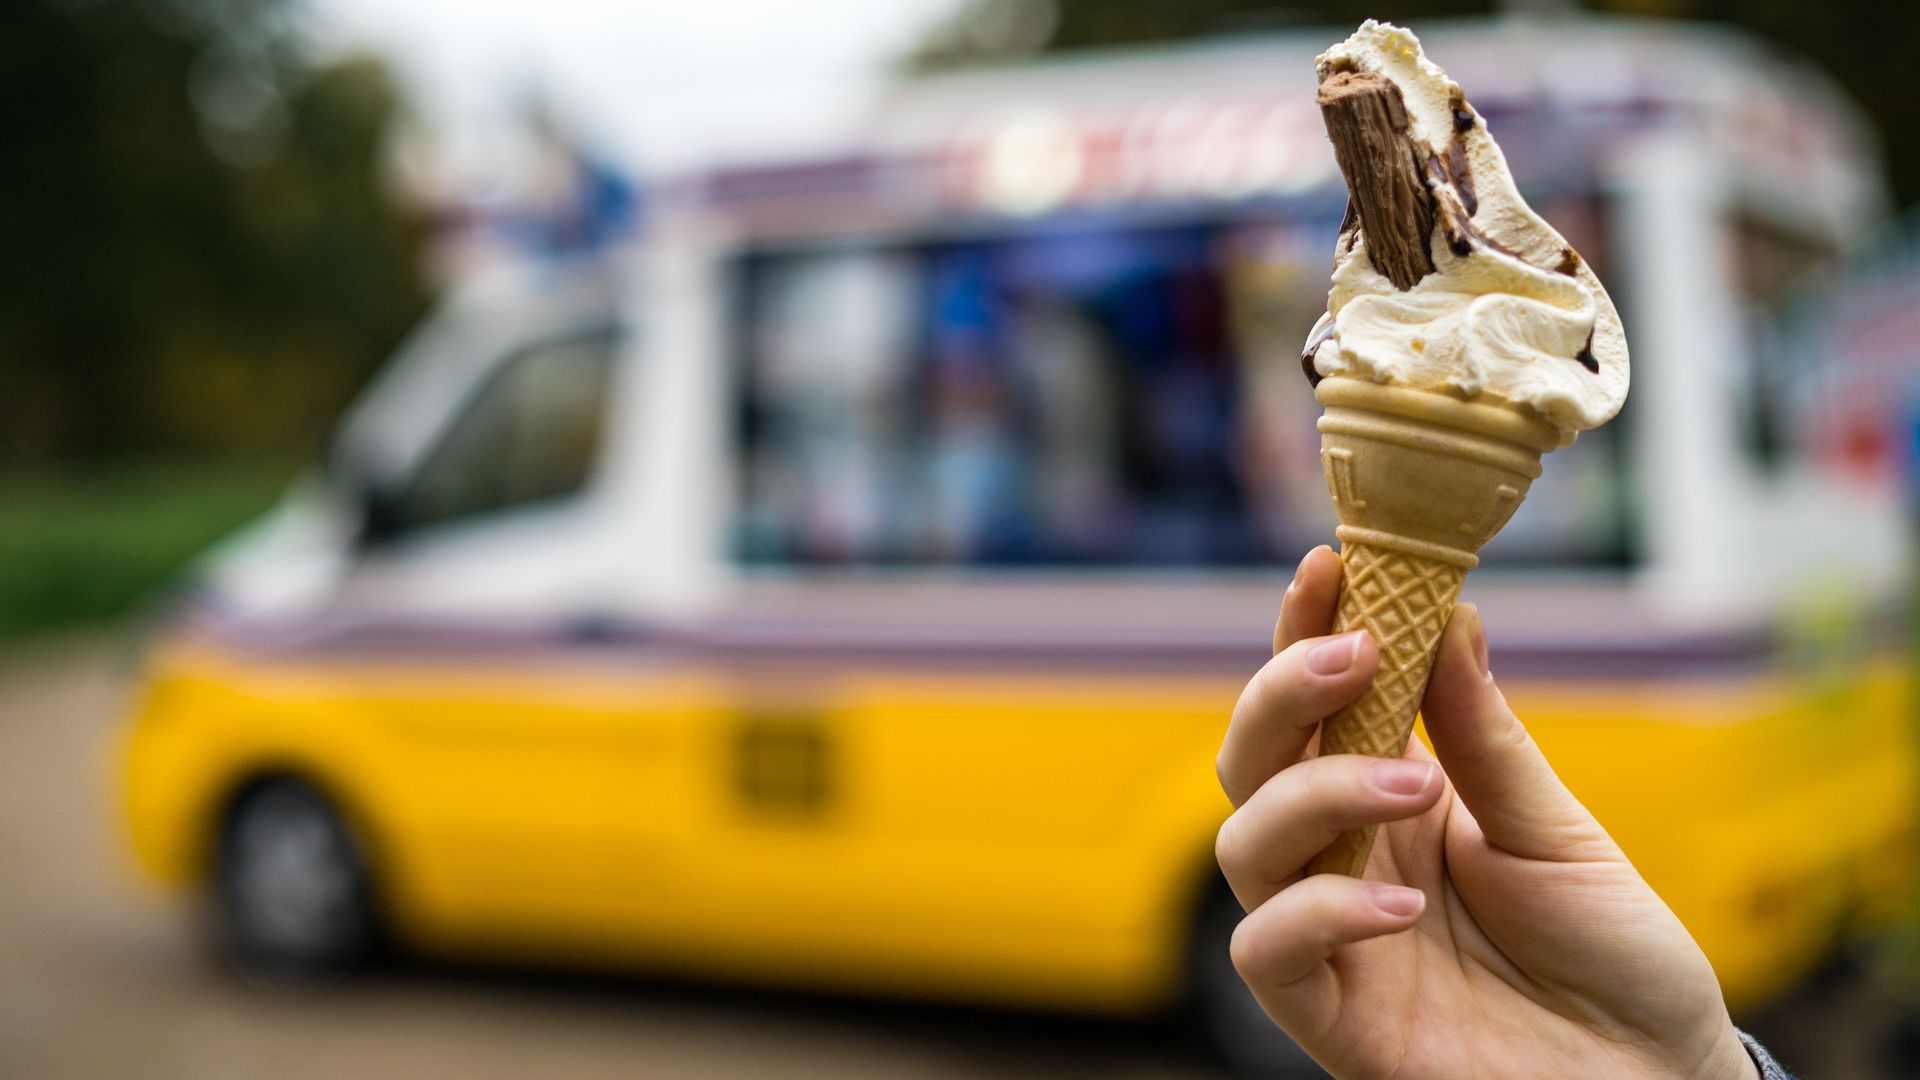 Styles Solar Van world's first electric ice cream van